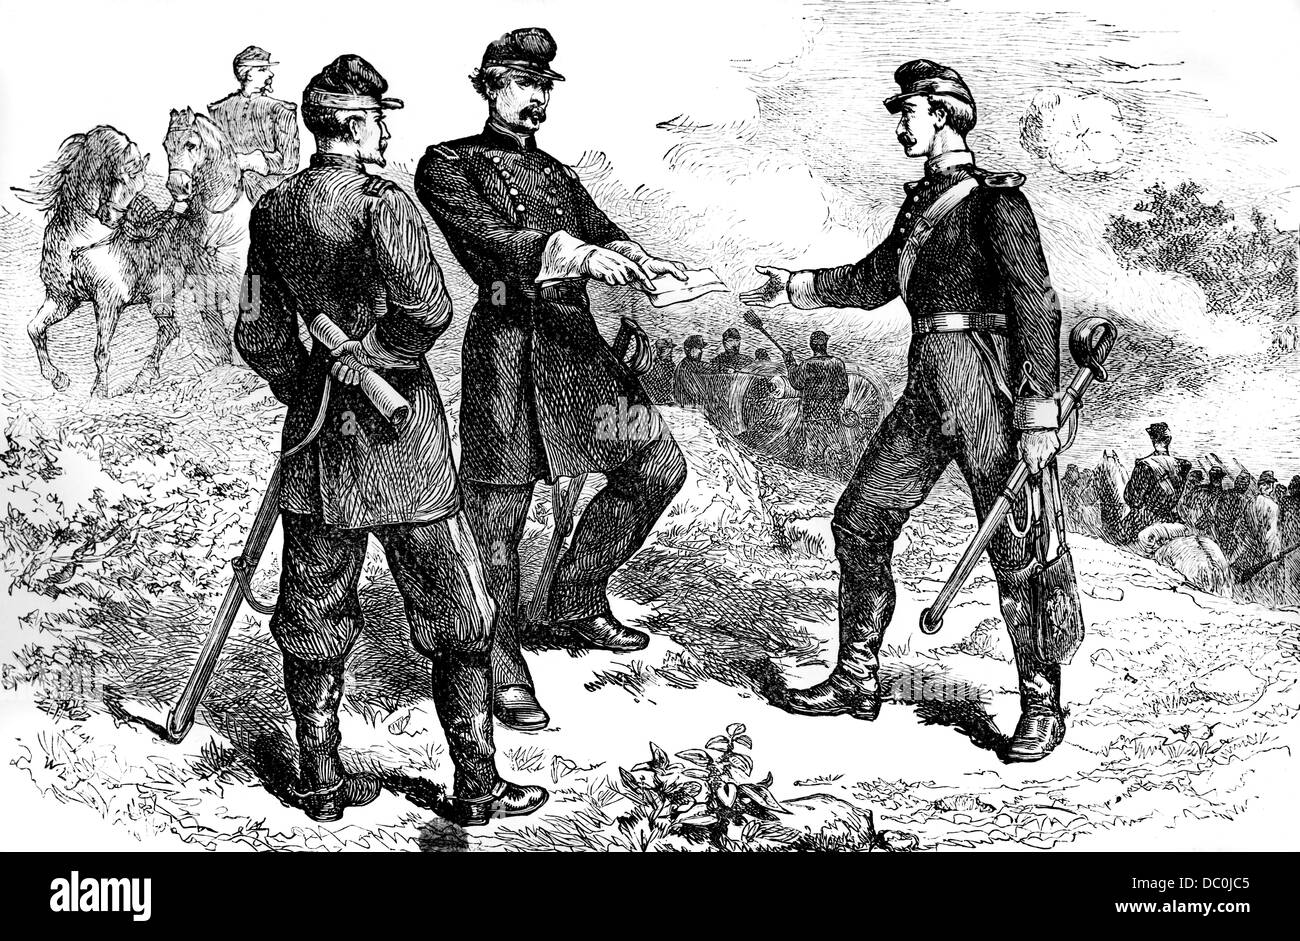 1800s 1860s MCCLELLAN AT THE BATTLE OF ANTIETAM SHARPSBURG MARYLAND SEPTEMBER 17 1862 Stock Photo